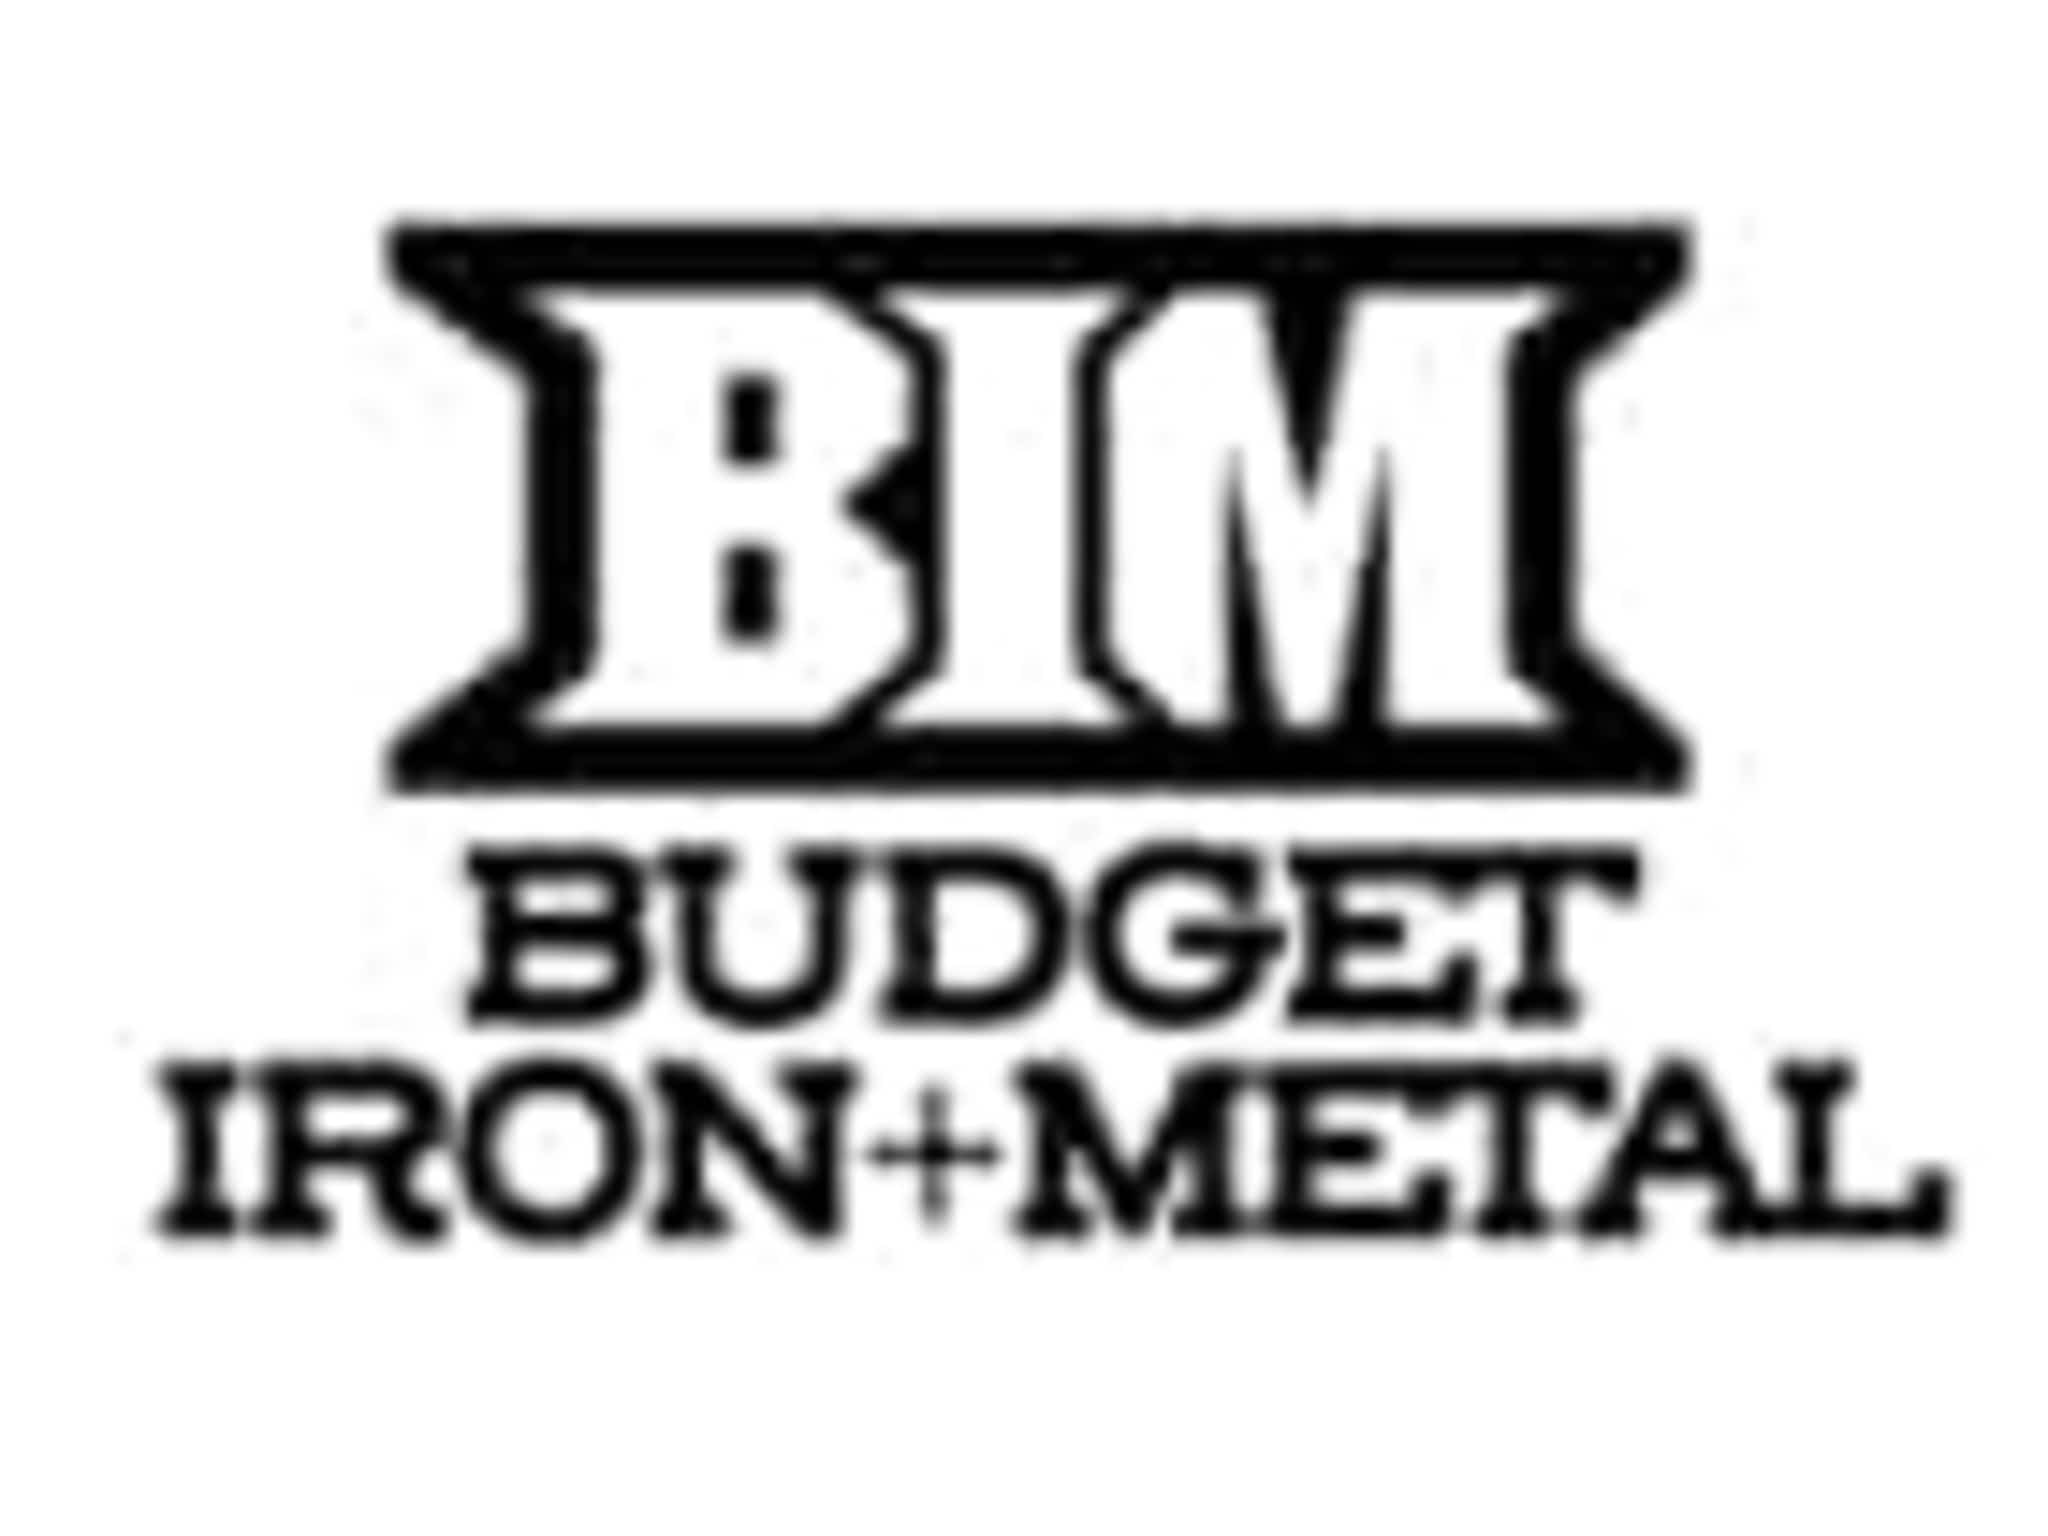 photo Budget Iron & Metal